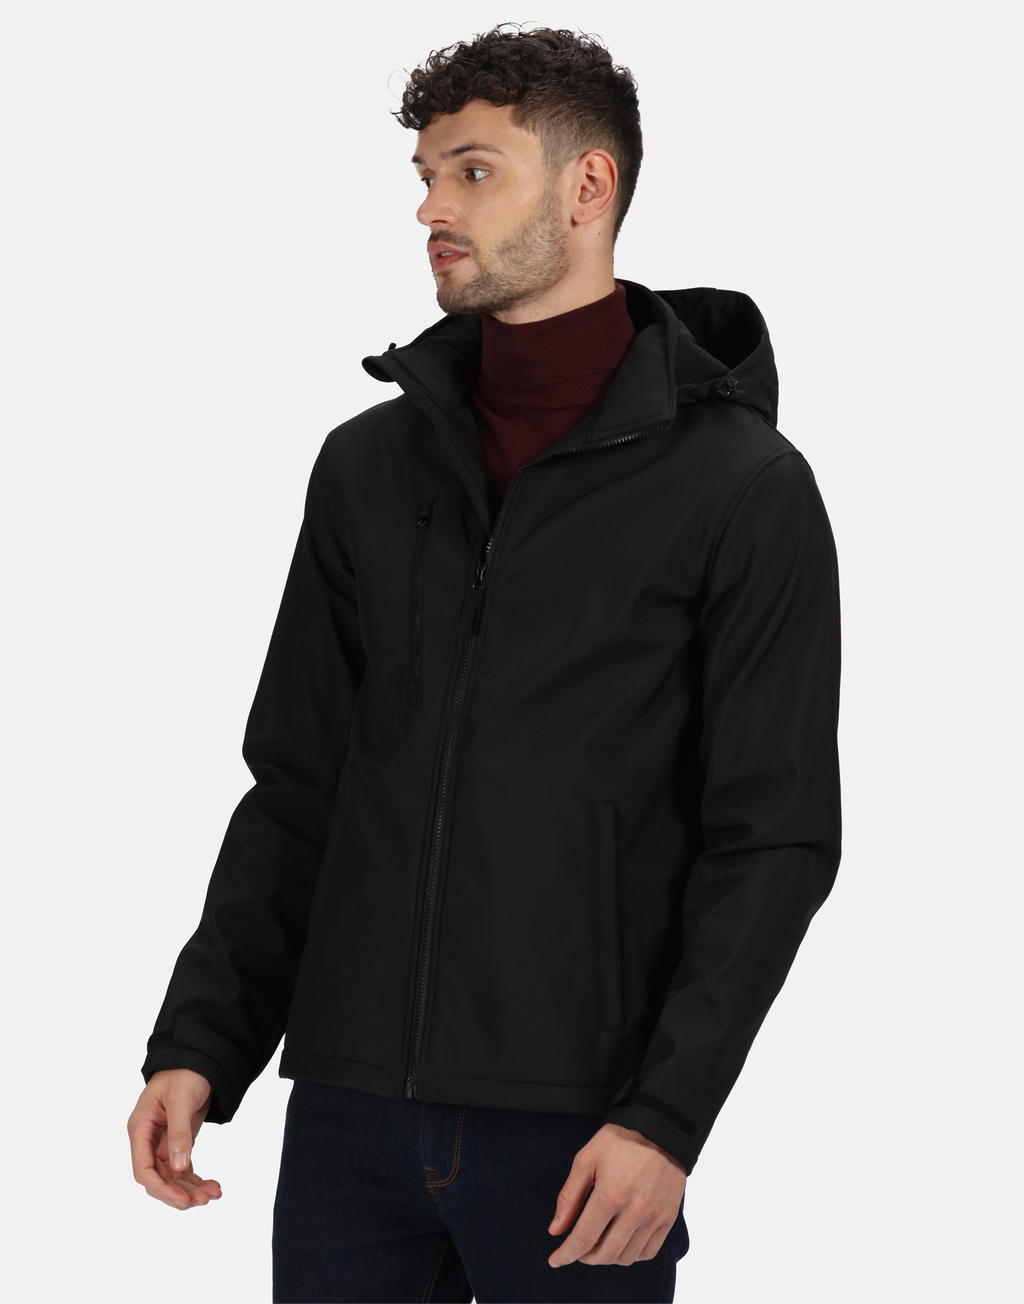  Venturer 3-Layer Hooded Softshell Jacket in Farbe Black